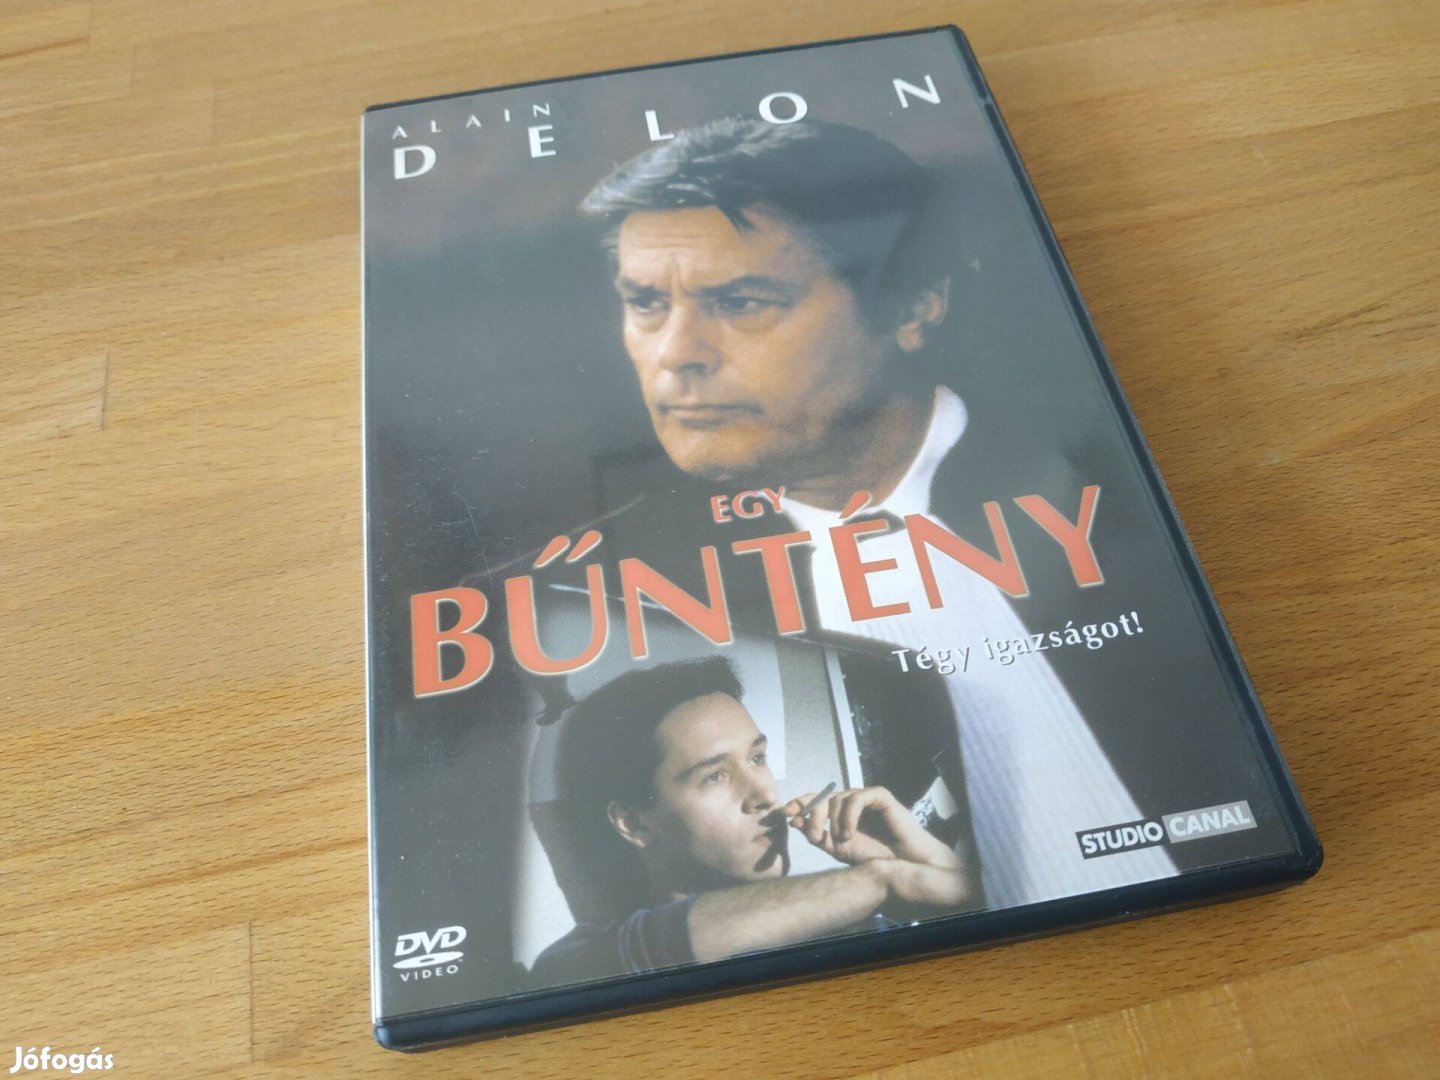 Alain Delon - Egy bűntény (francia filmdráma, 90 perc, 1993) DVD